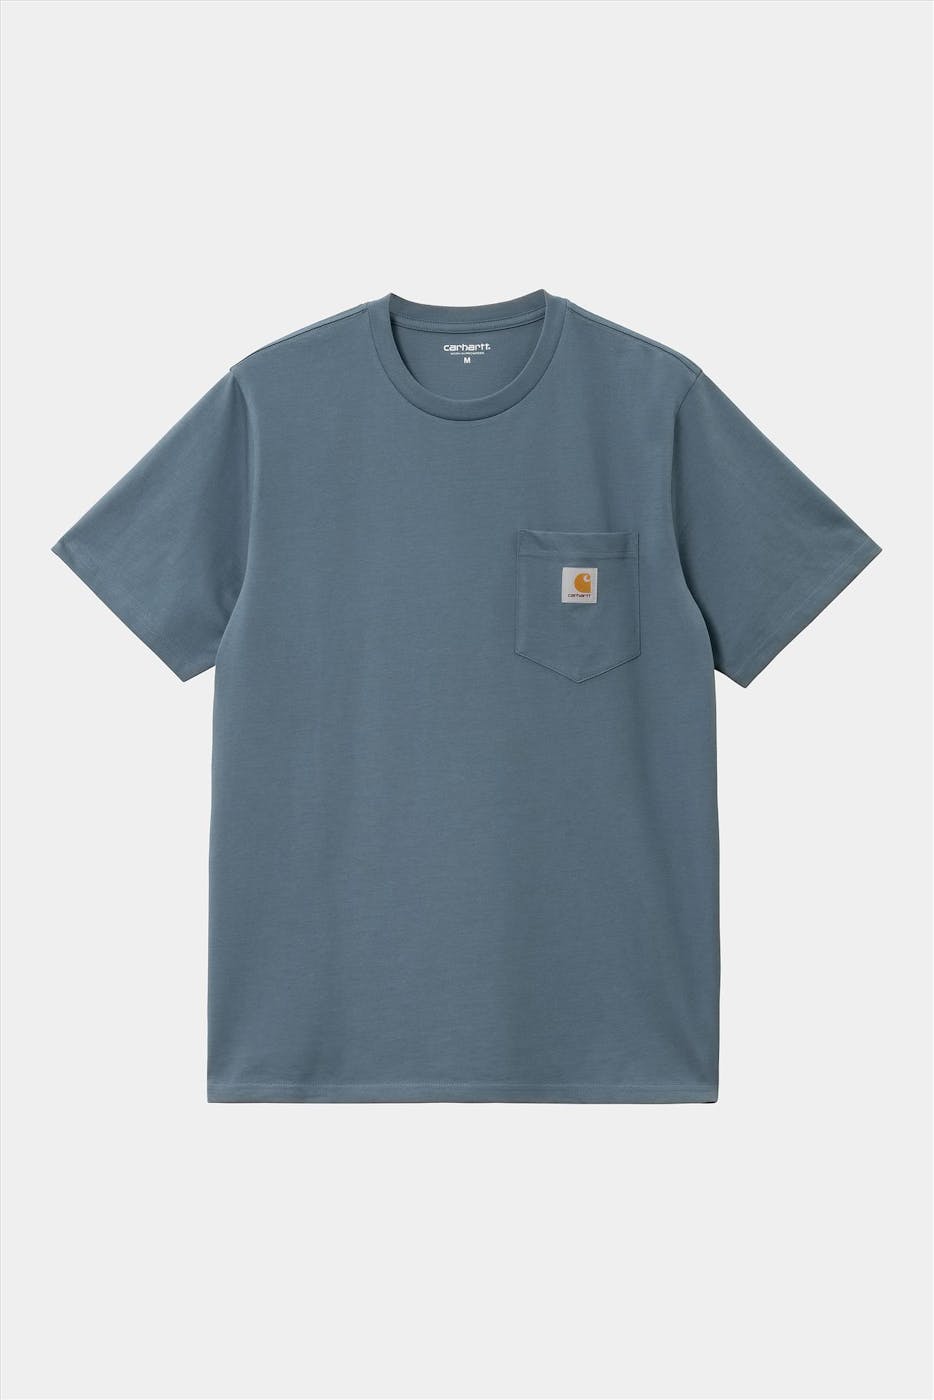 Carhartt WIP - Blauwe Pocket T-shirt